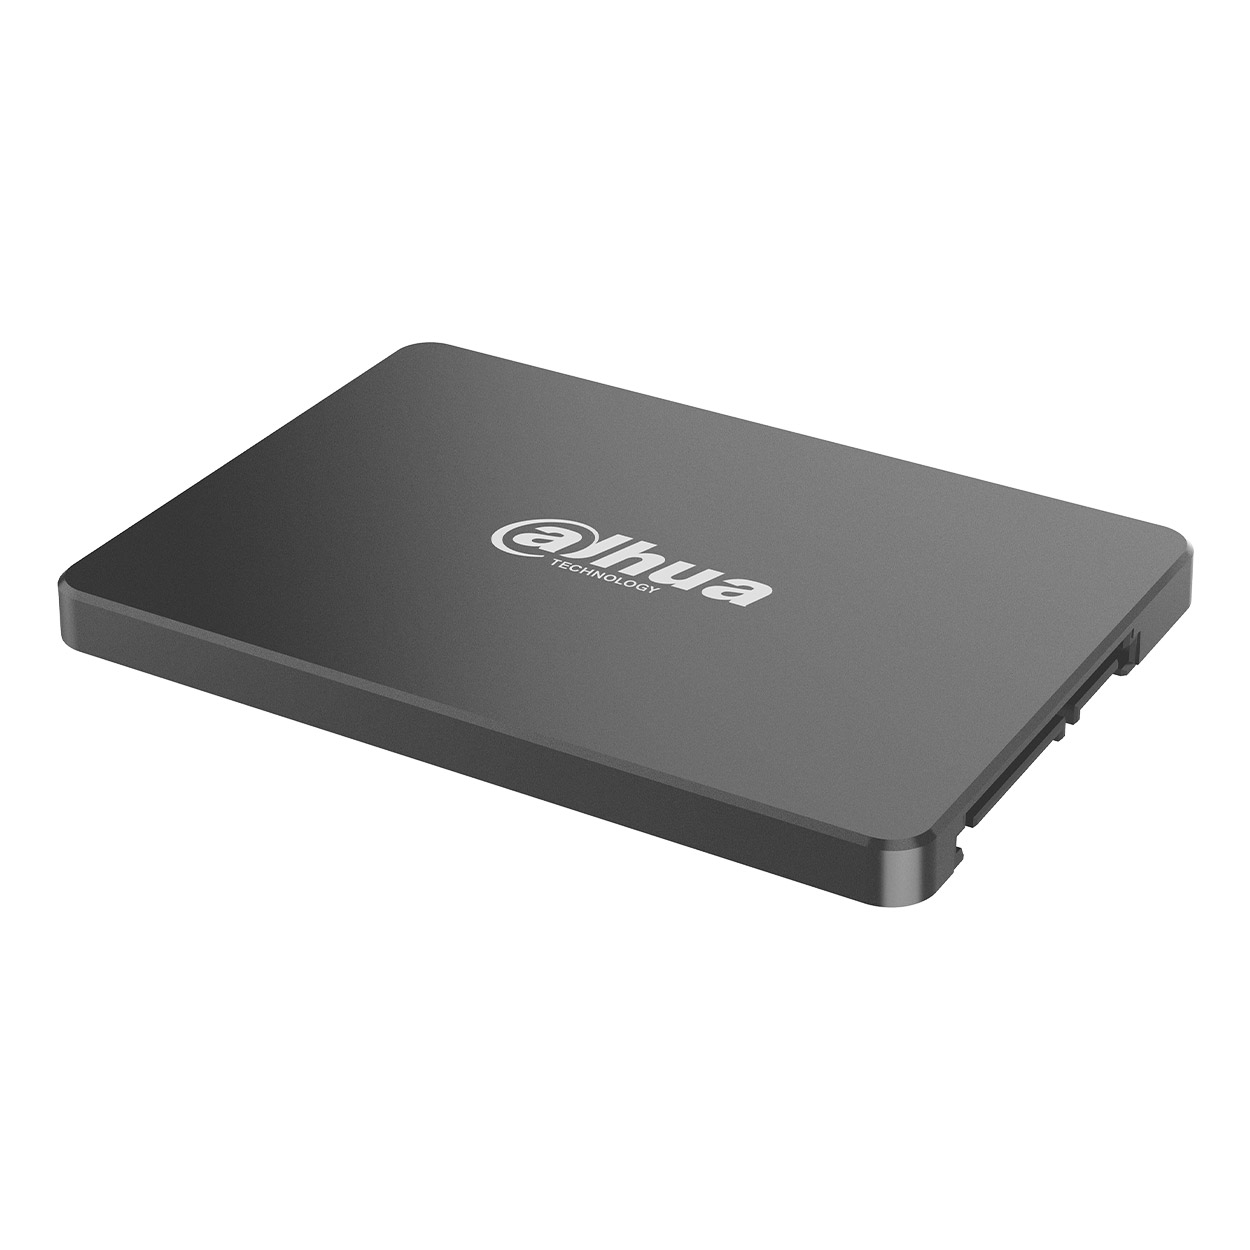 DAHUA C800A 240 GB 2.5" SATA3 SSD 500/400 (SSD-C800AS240G)